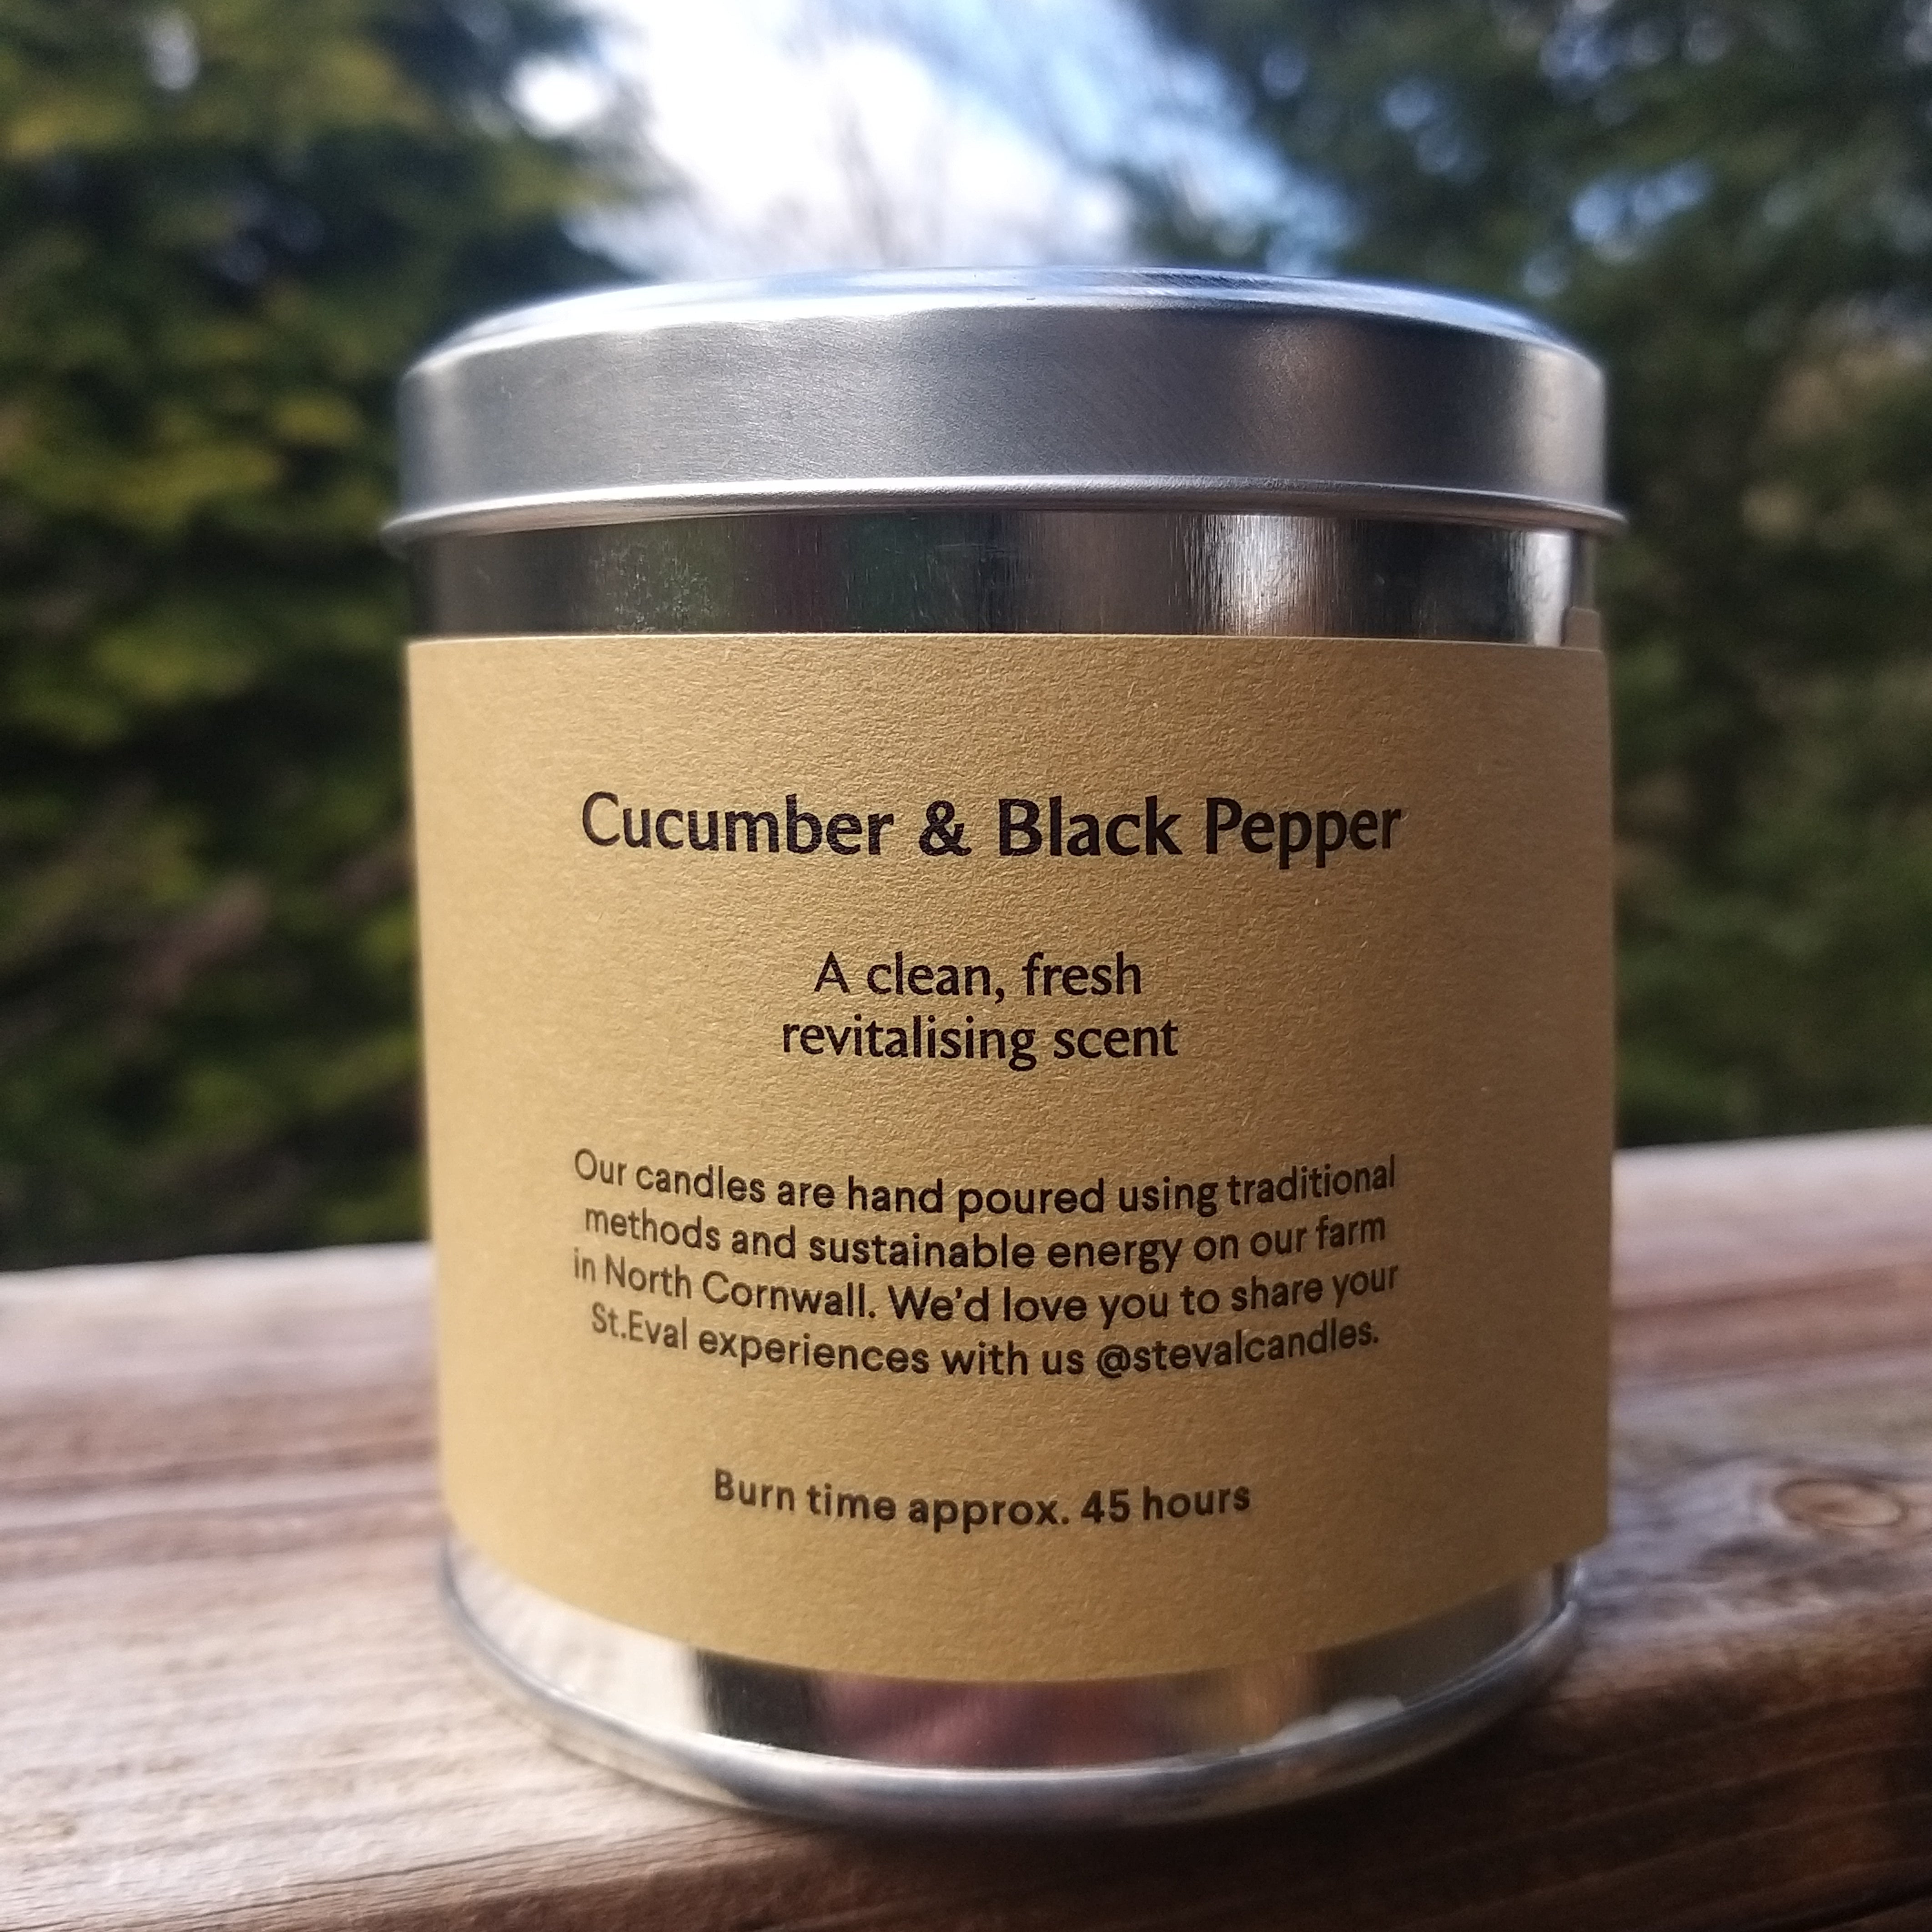 St Eval Cucumber & Black Pepper Large Candle